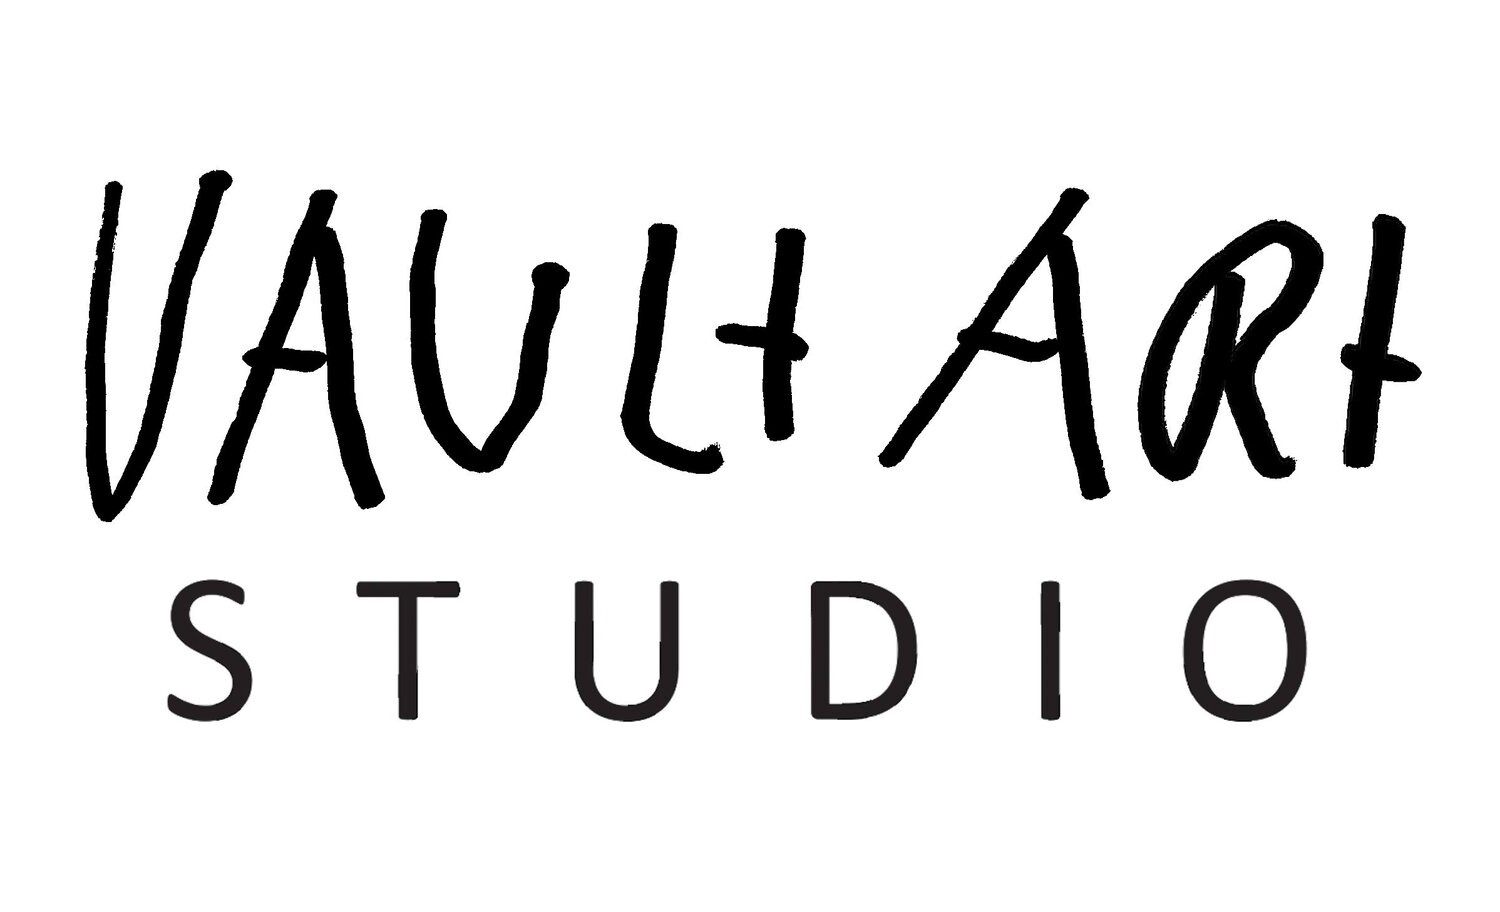 Vault Art Studio logo